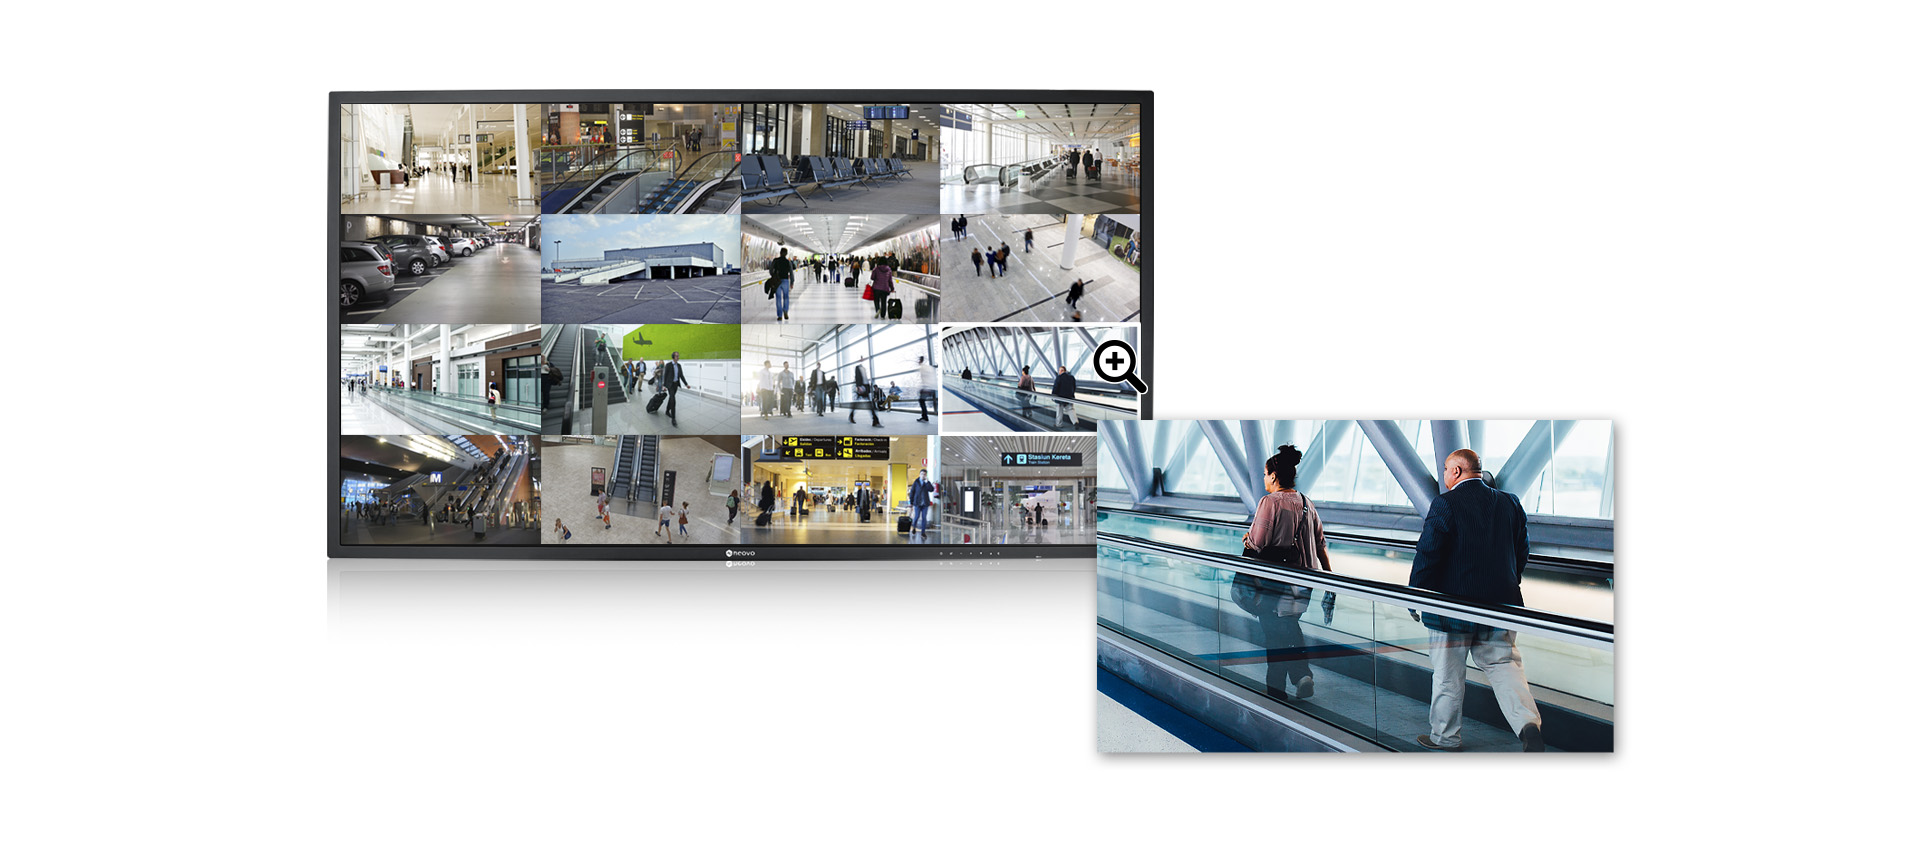 SMQ-Series 4K Displays for video surveillance feature 4K resolution